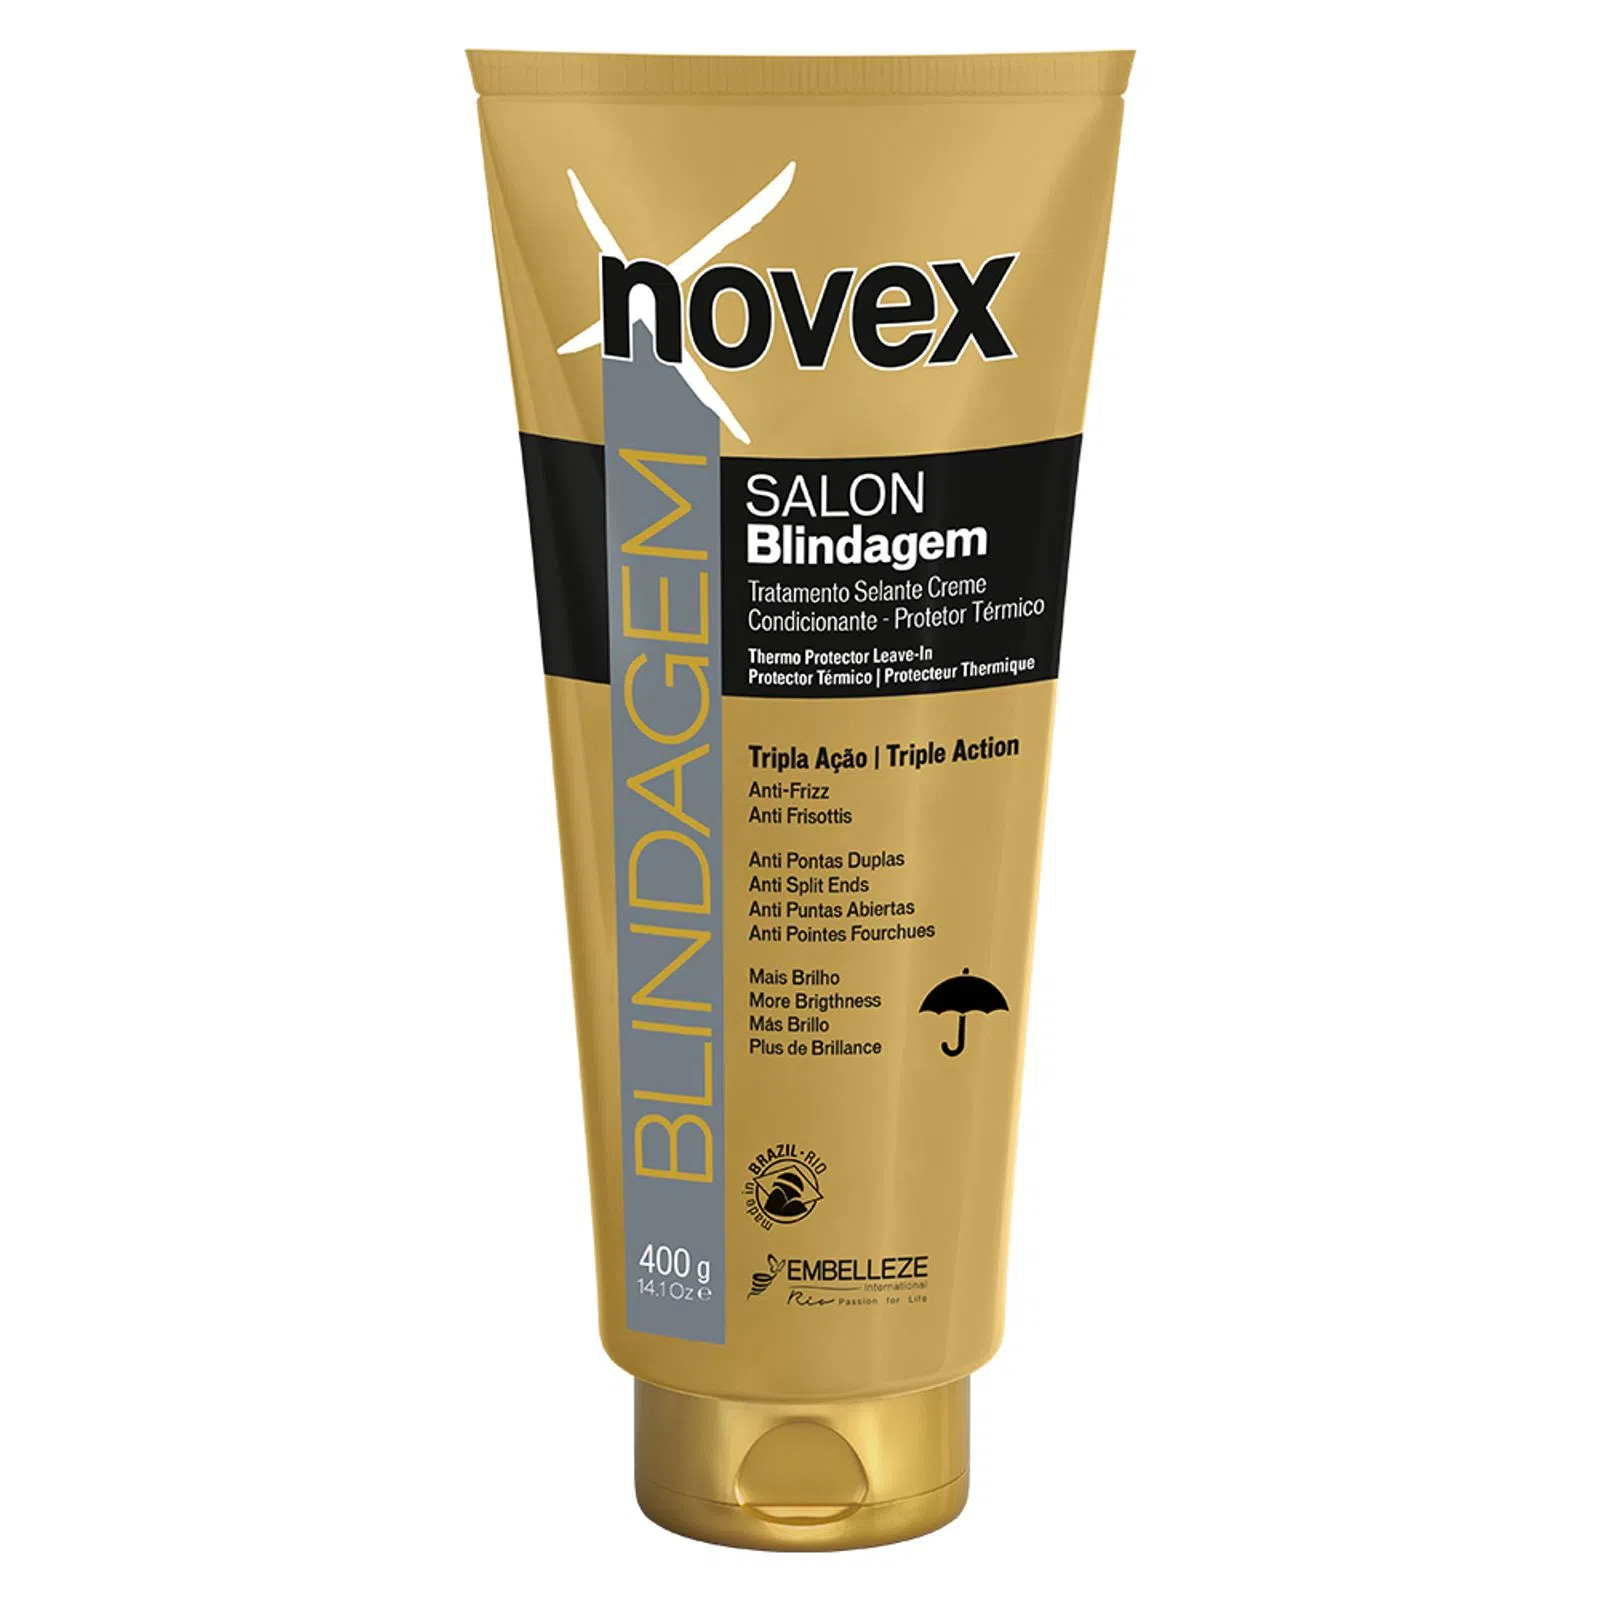 NOVEX Blindagem Leave-in Thermo Protector - Creme de Tratamento Protetor Térmico, 200g